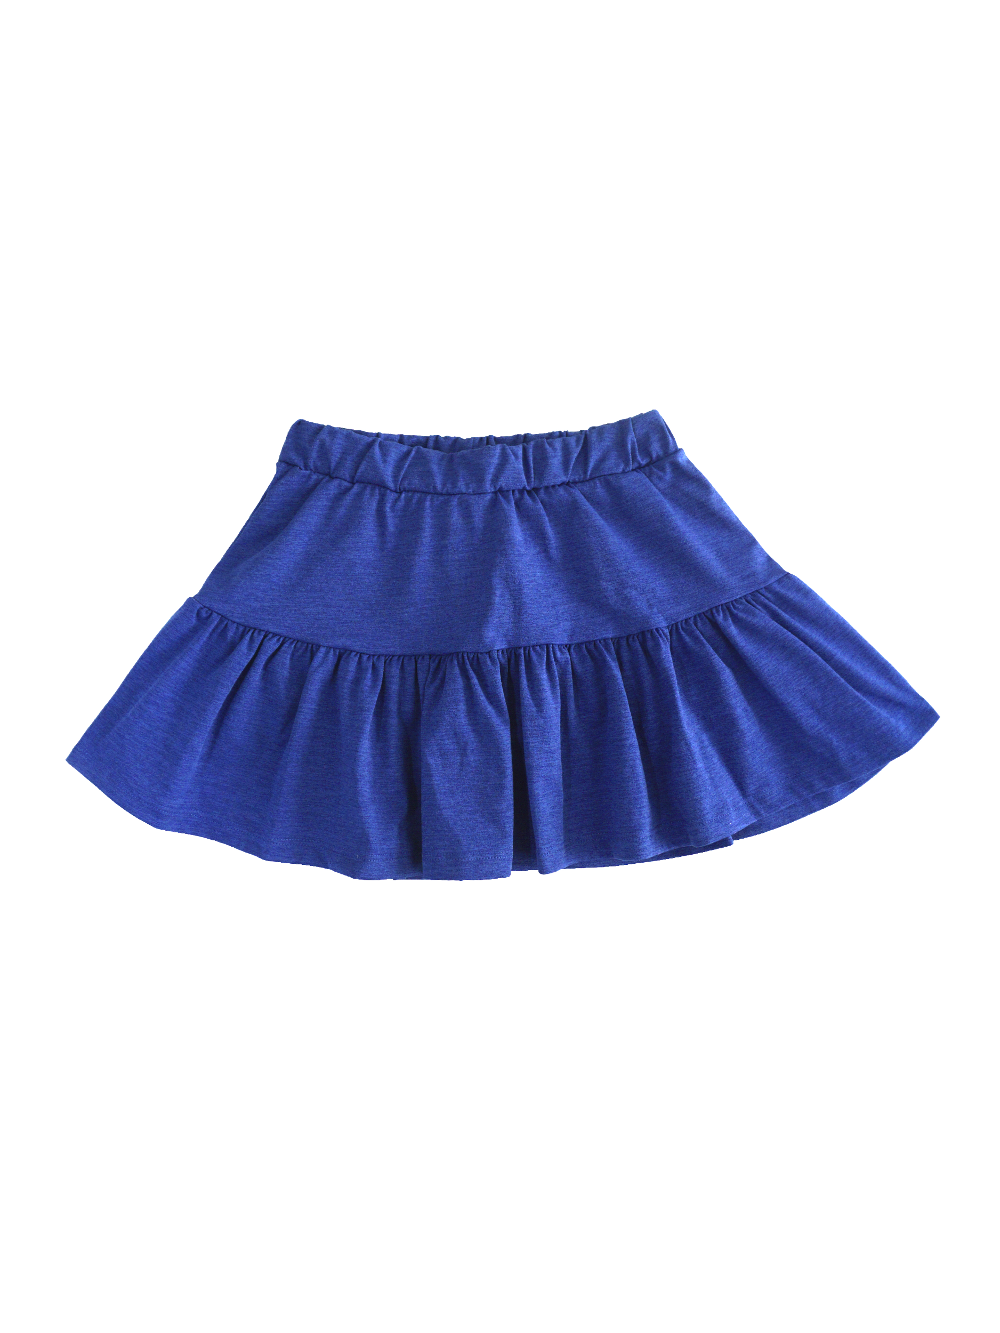 Soft Ice Skirt : Blue